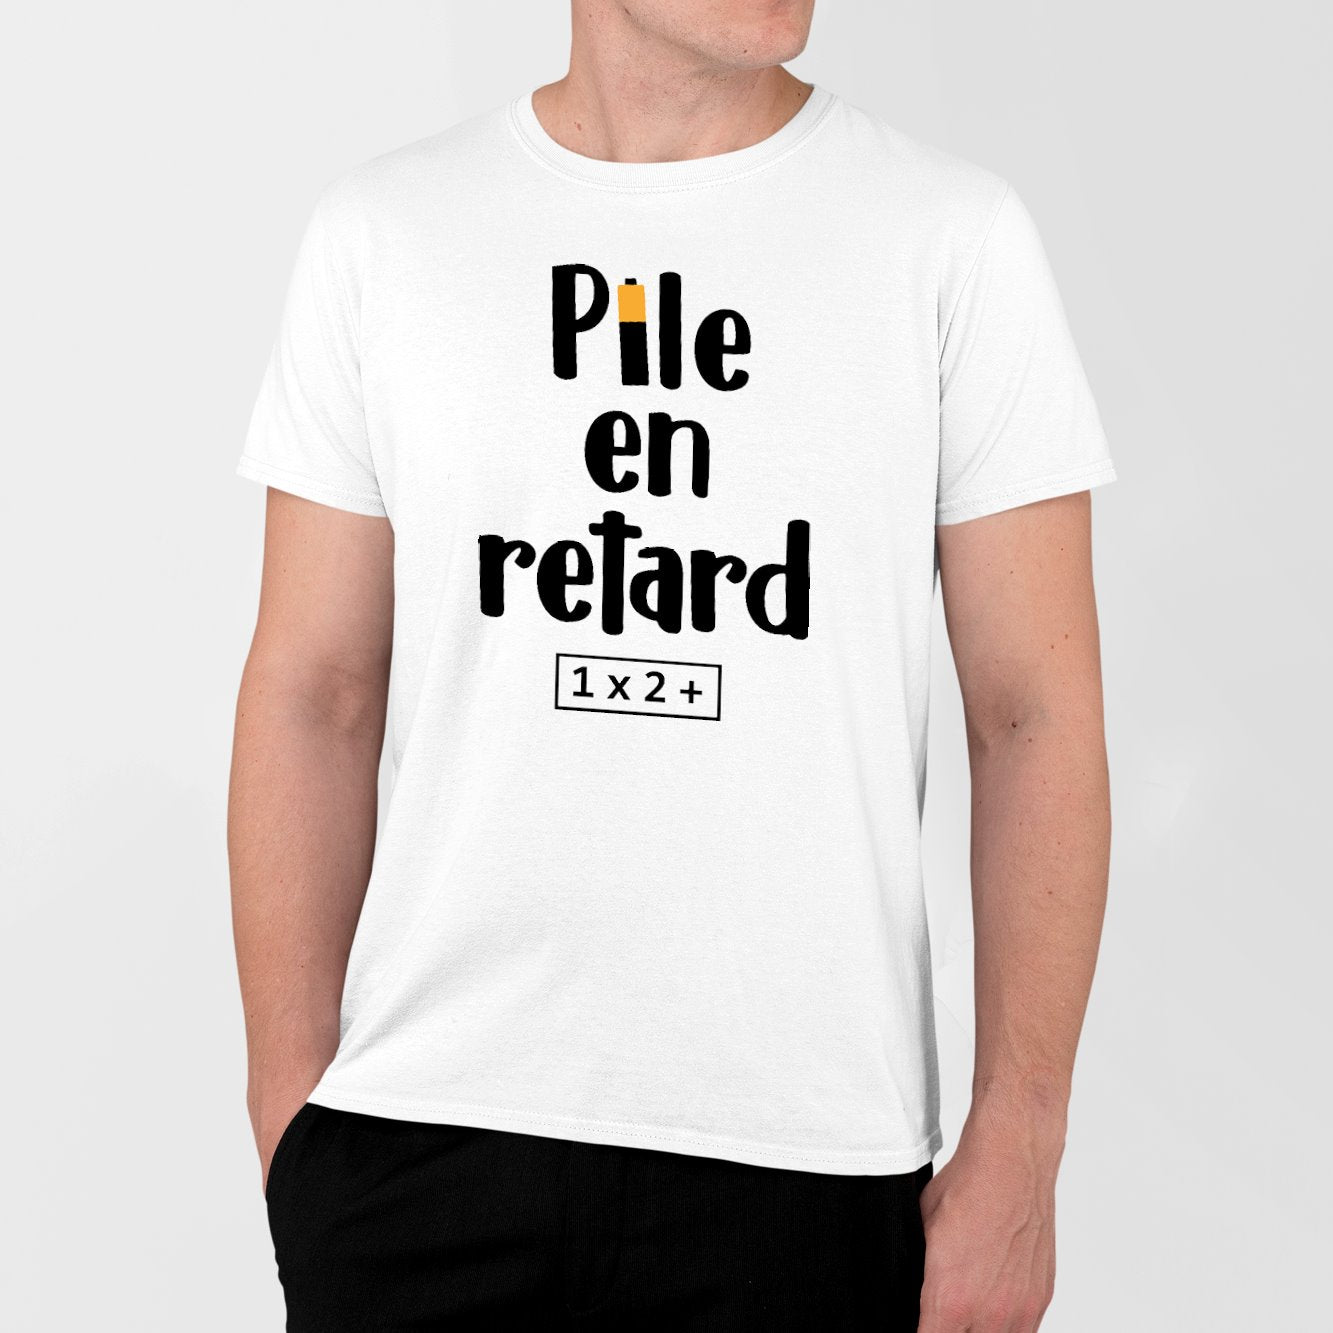 Tee-shirt cadeau homme humour breton